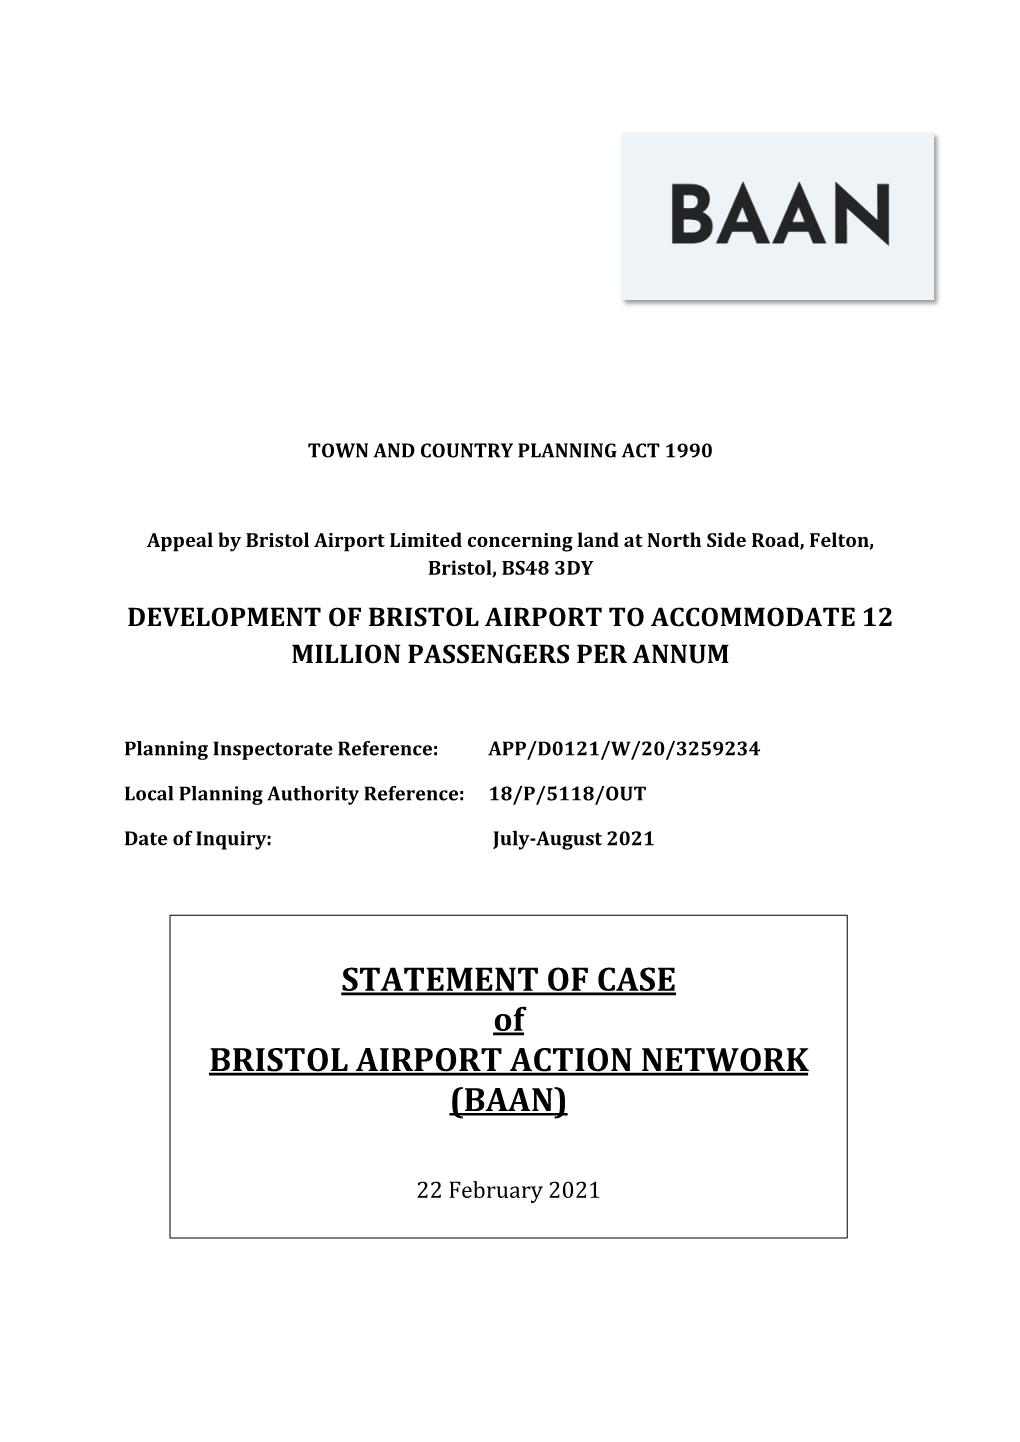 STATEMENT of CASE of BRISTOL AIRPORT ACTION NETWORK (BAAN)